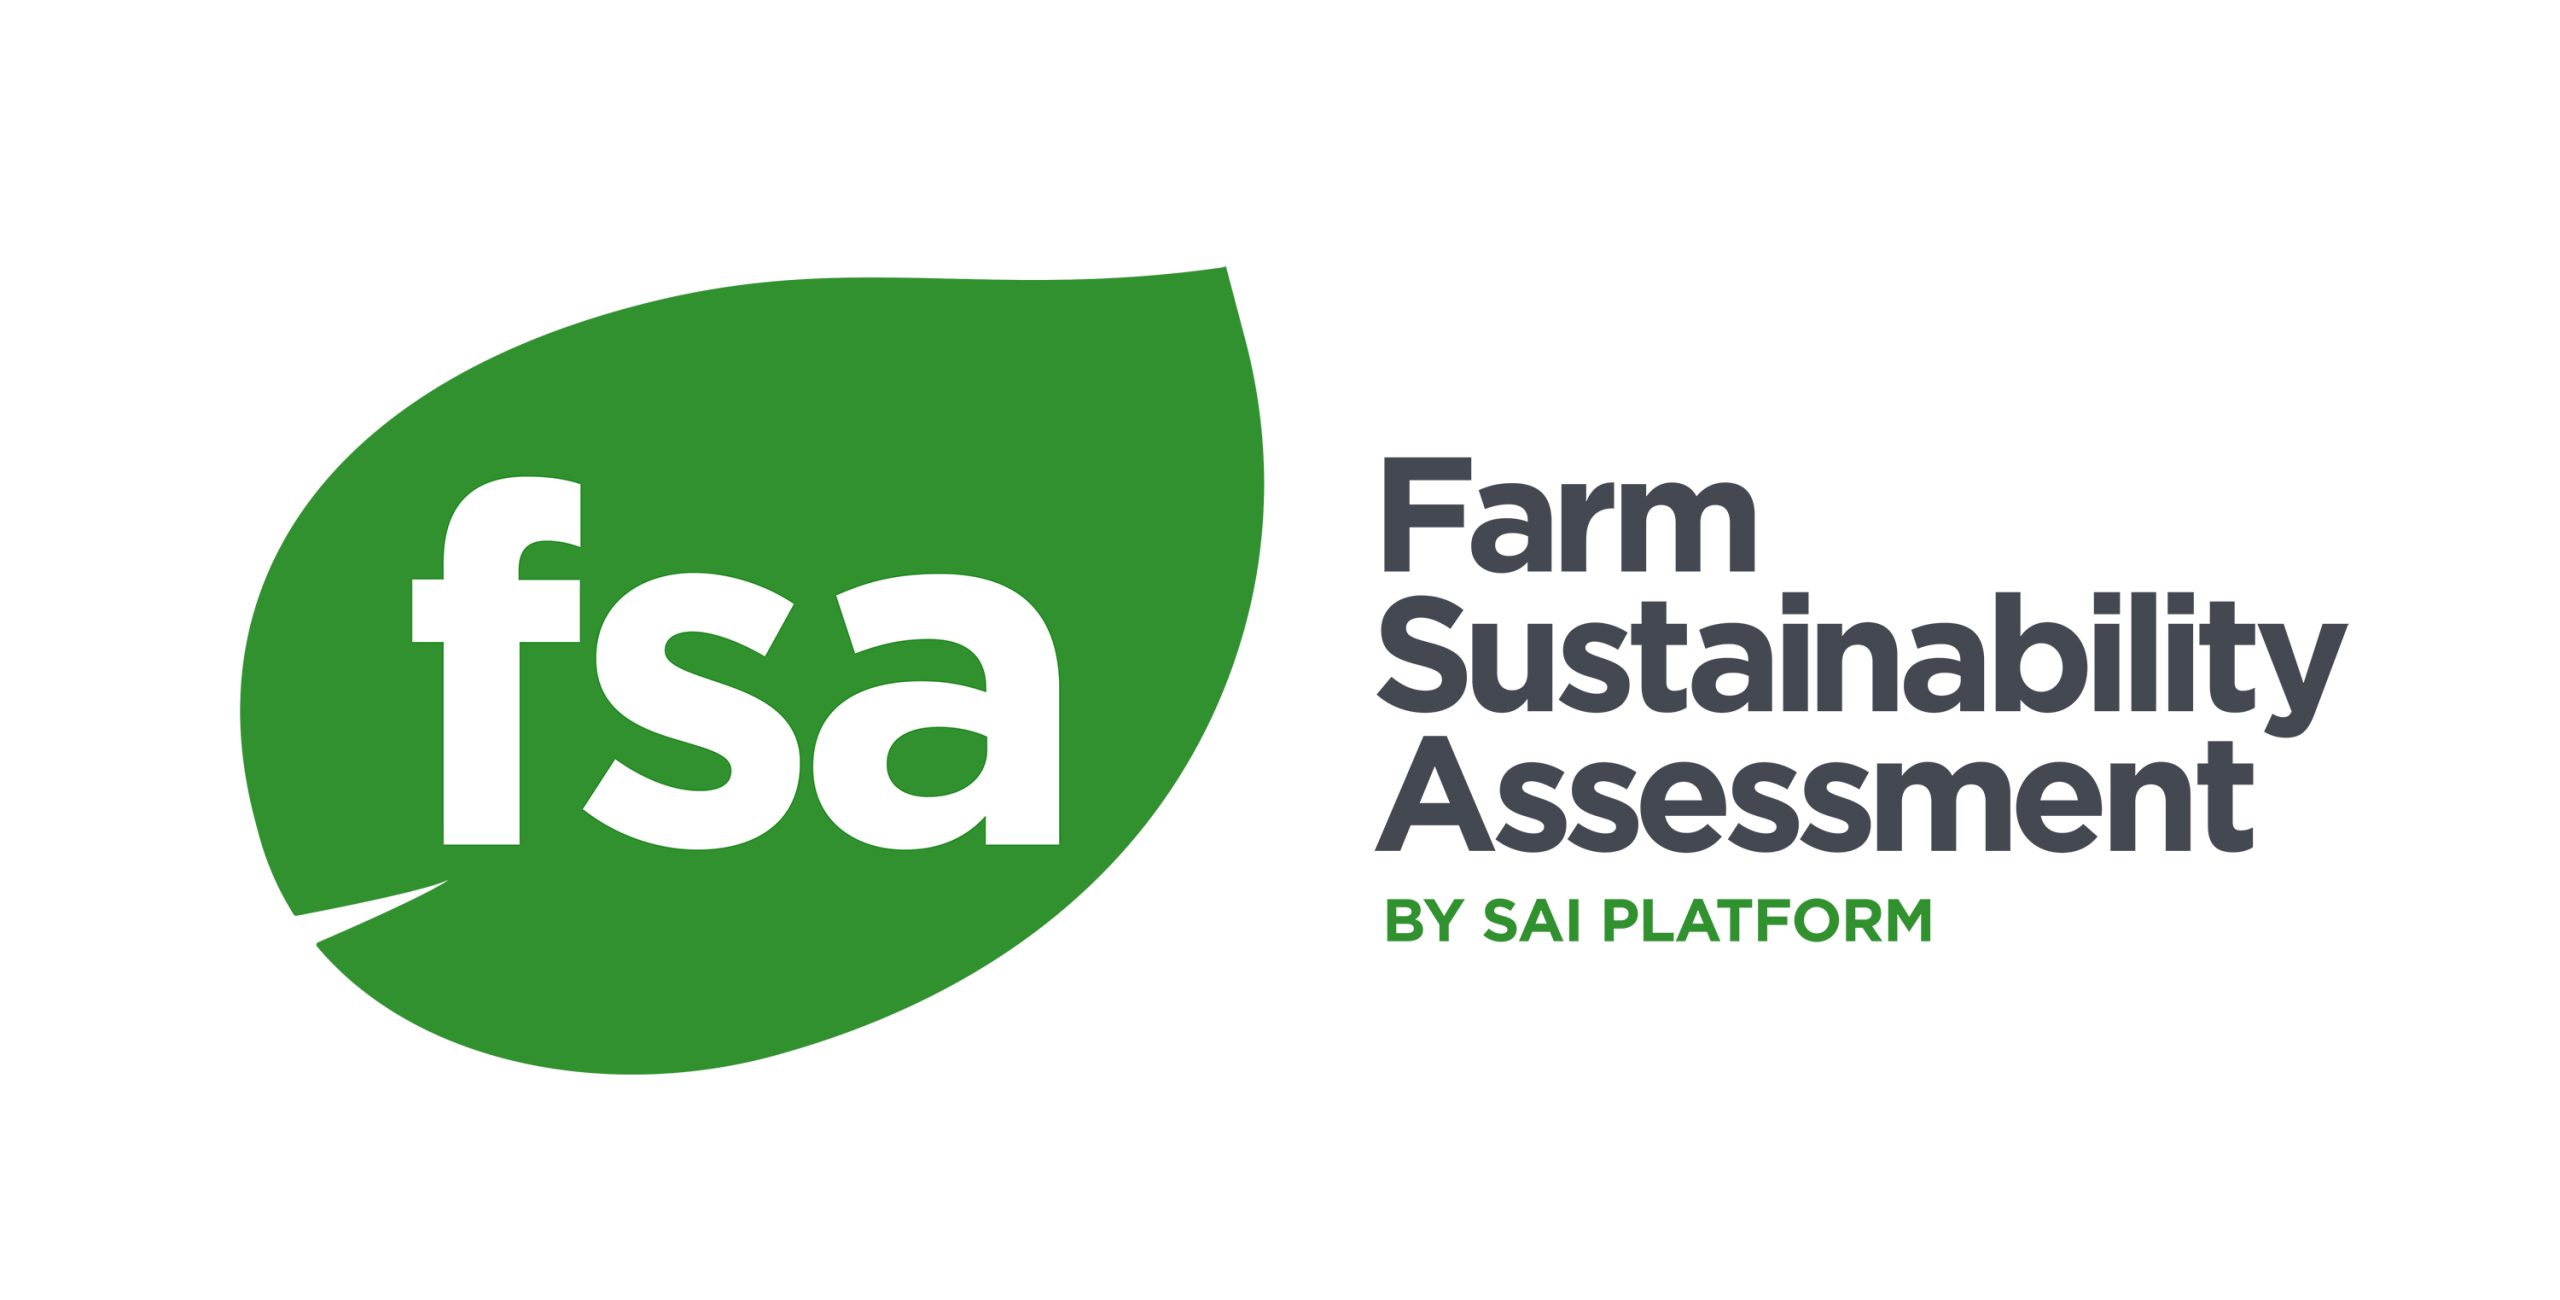 FSA - Farm Sustainability Assessment